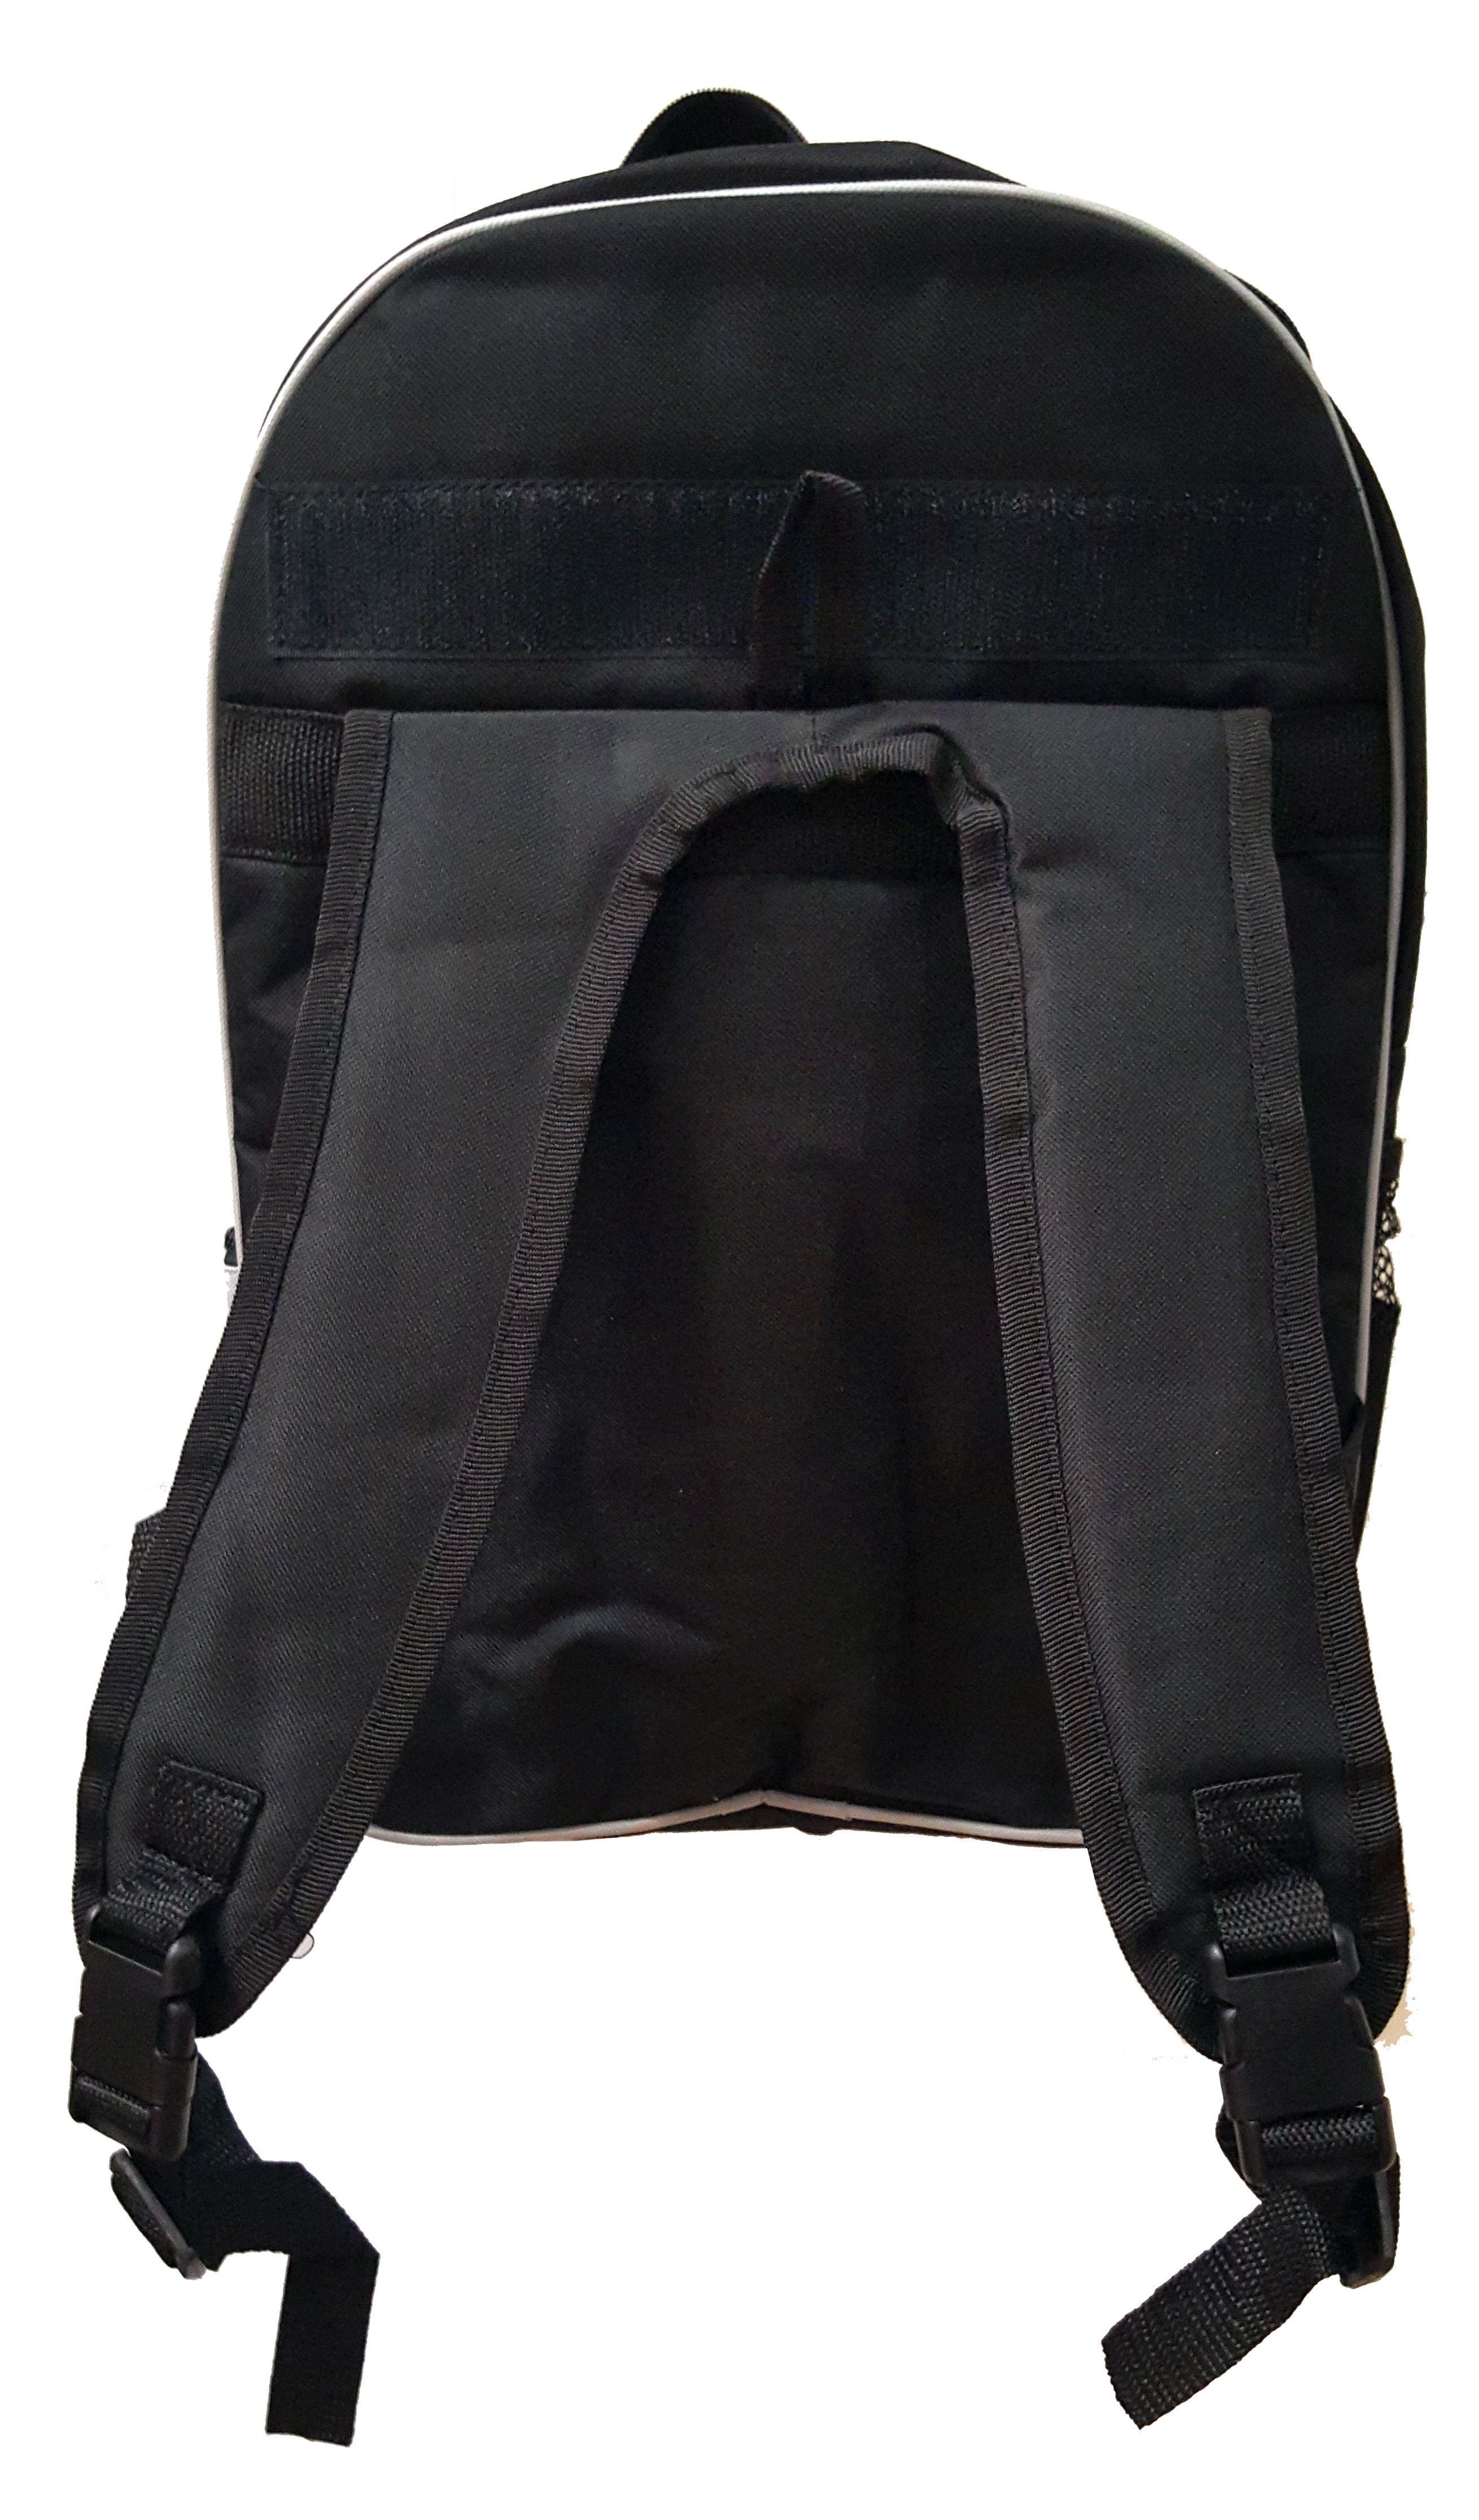 Smokey Blue Skull - Large Black School Backpack - image 4 of 4